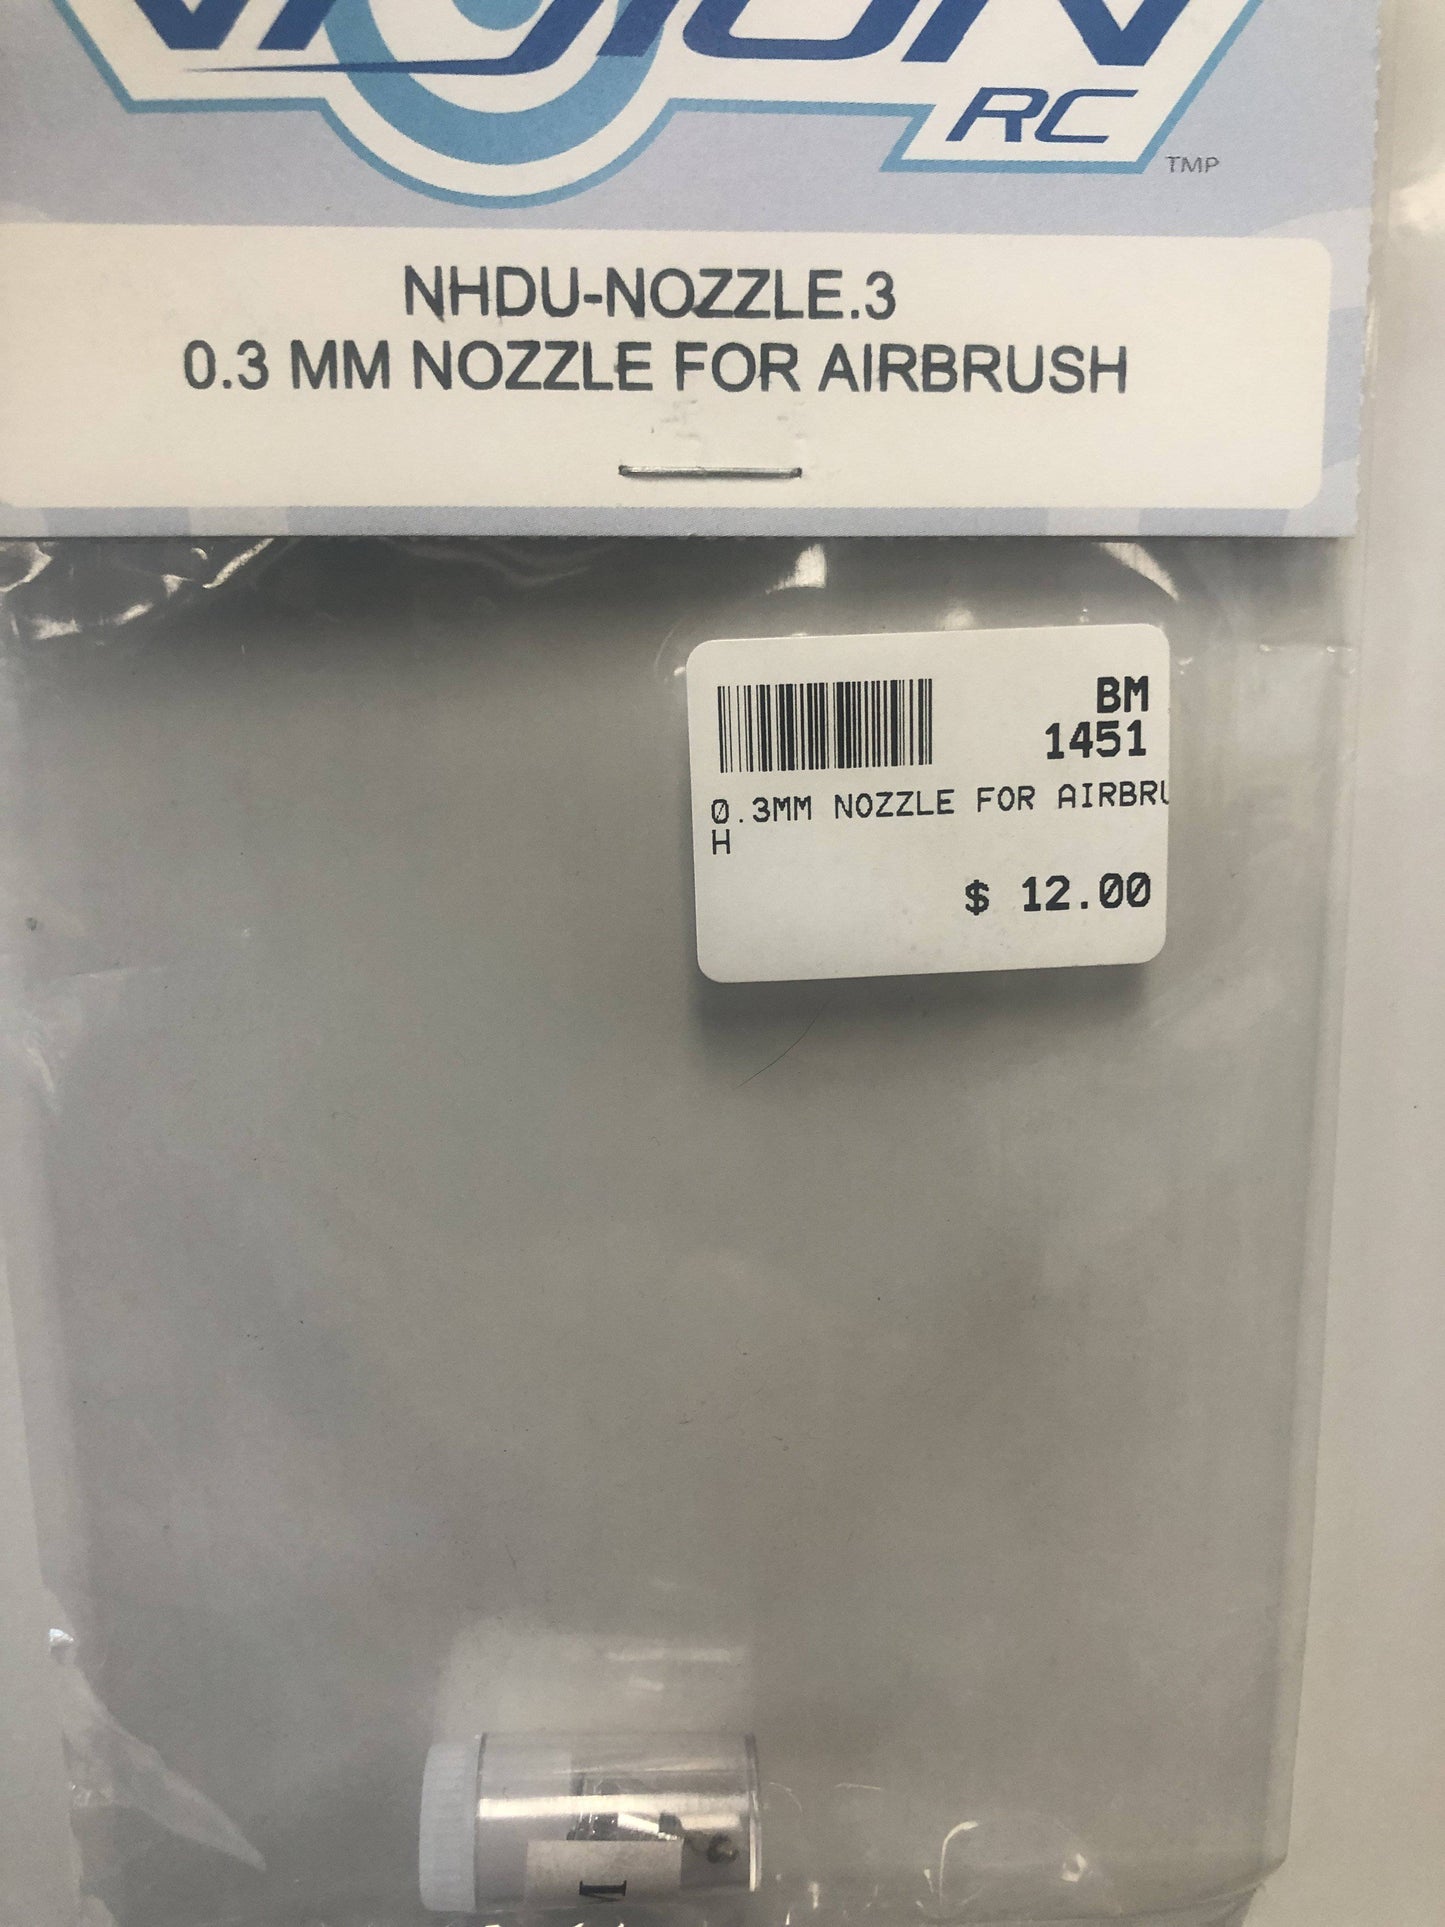 0.3 MM NOZZLE FOR AIRBRUSH - NHDU-NOZZLE.3 - Aussie Hobbies 